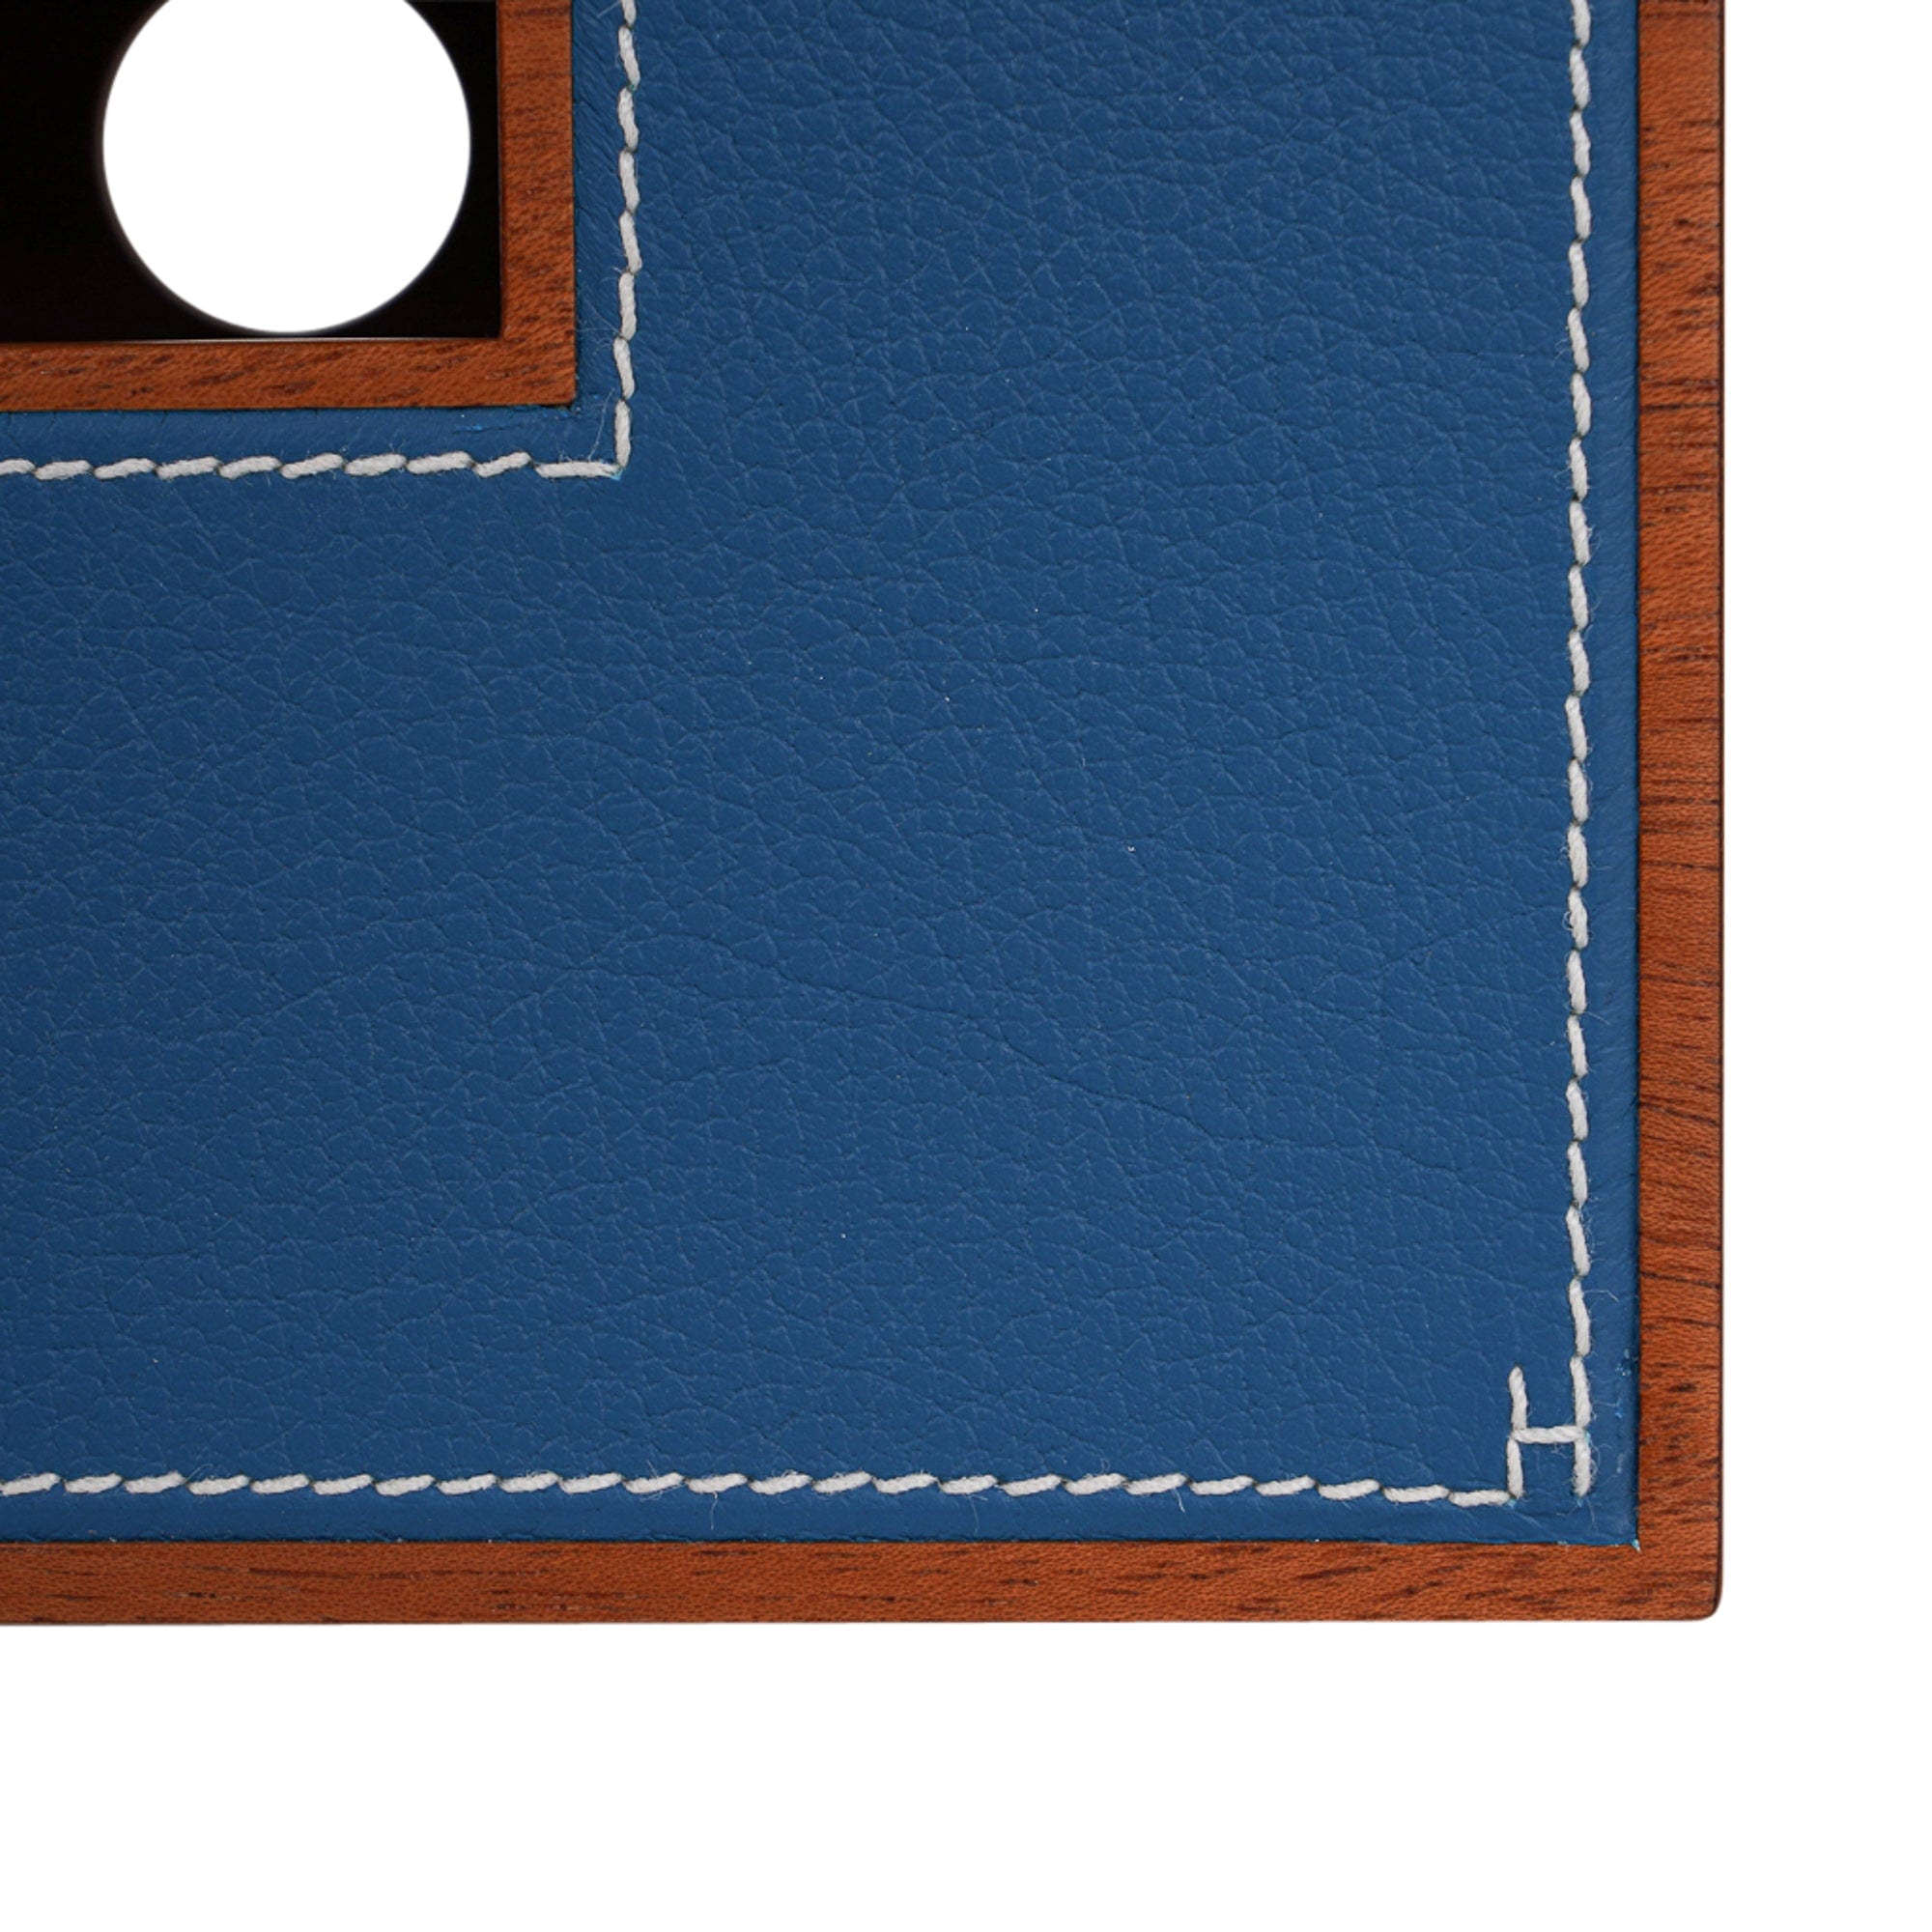 Hermes Pleiade Tissue Box Large Model Mahogany Blue Izmir Leather New –  Mightychic